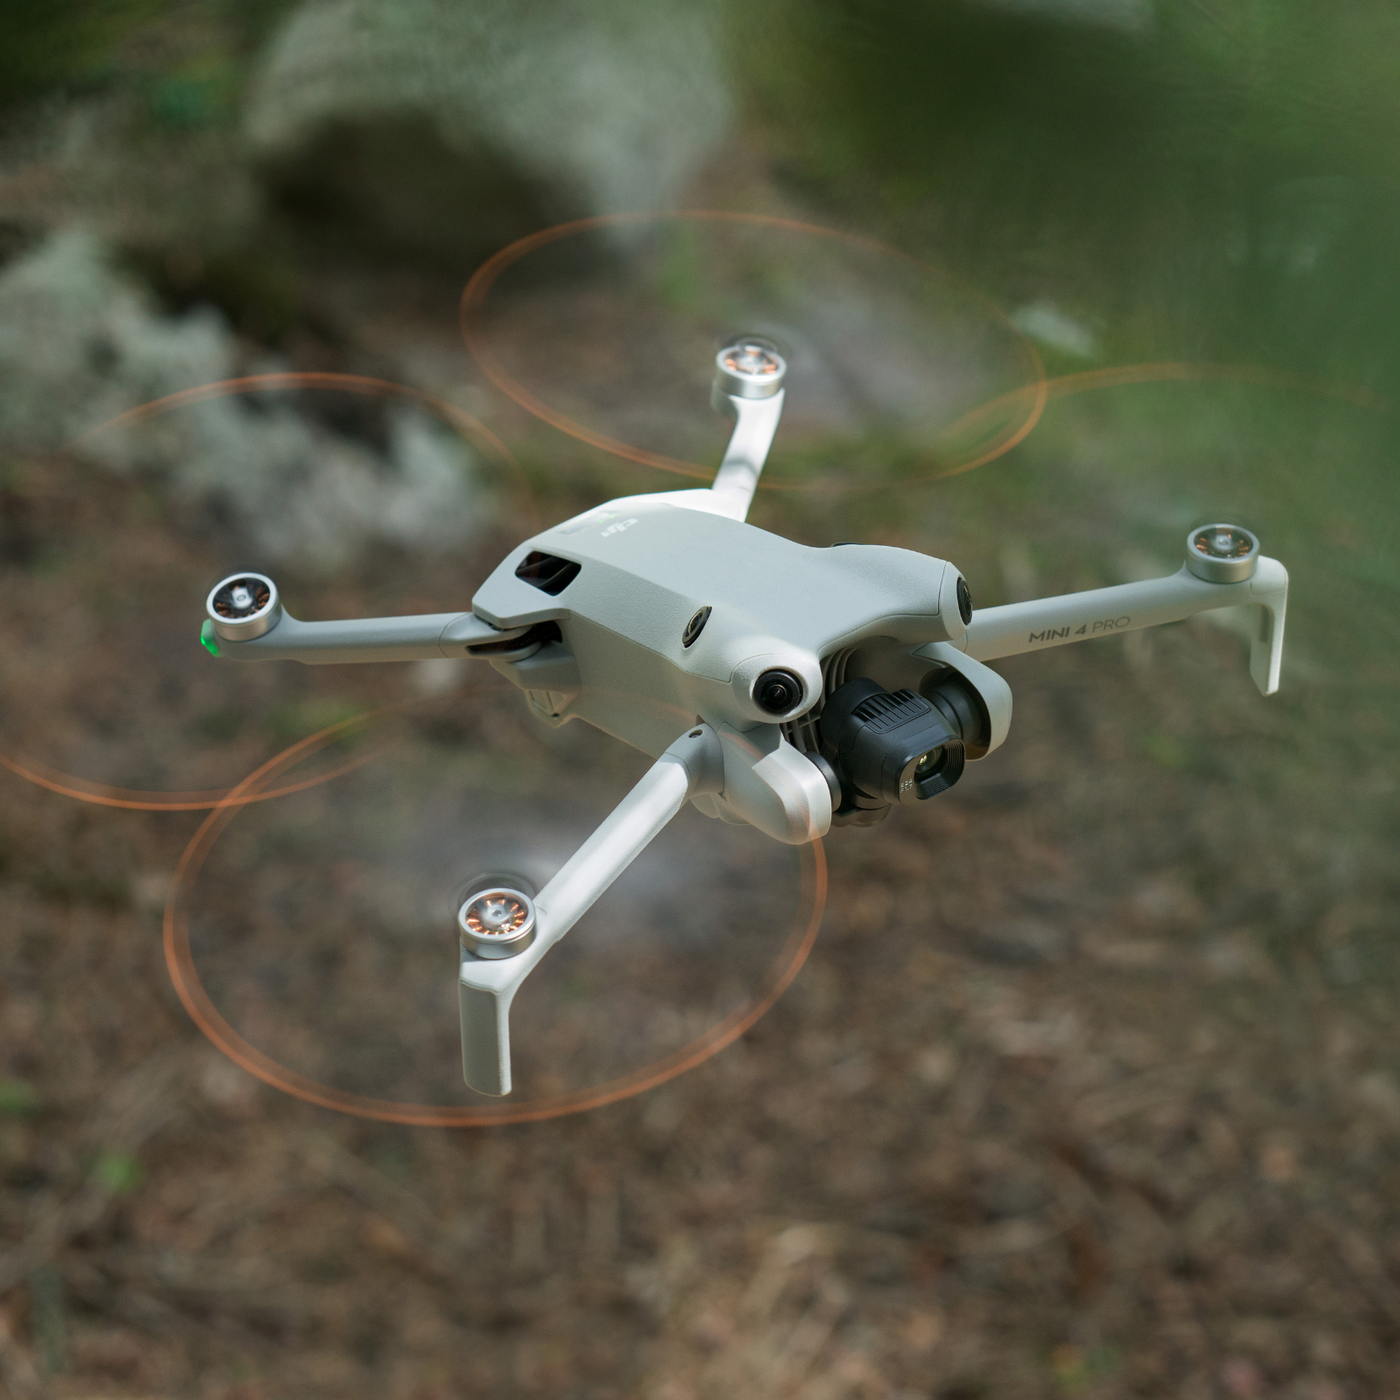 Drone Dji Mini 3 Fly More Combo avec radiocommande smart controller Gris -  Drone photo vidéo - Achat & prix